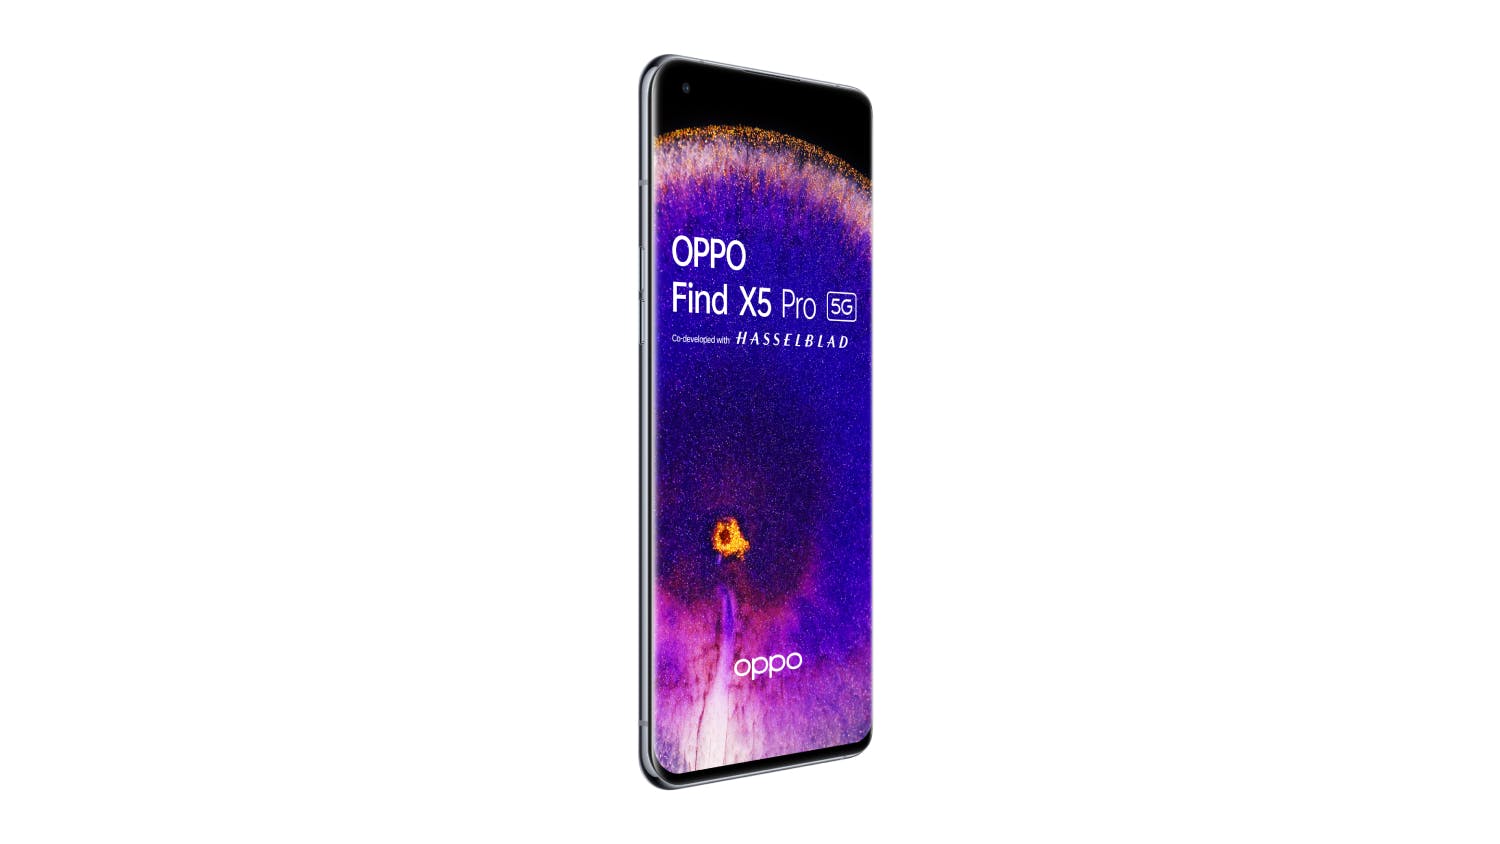 OPPO Find X5 Pro 5G 256GB Smartphone - Ceramic White (Spark/Open